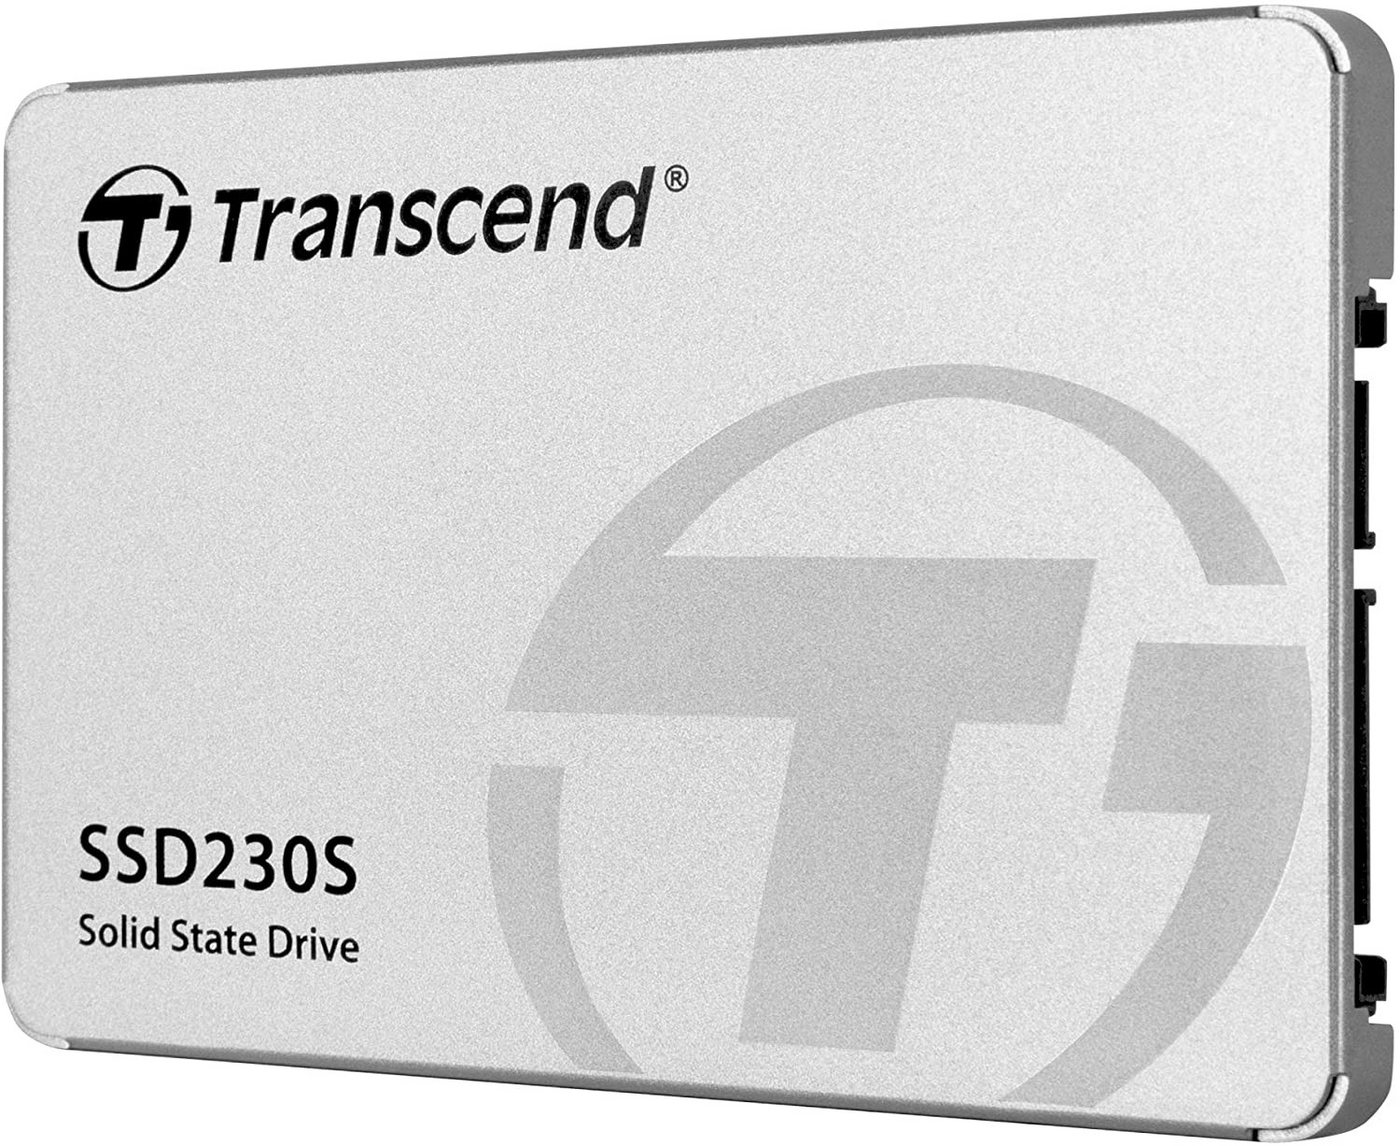 Transcend Transcend SSD230S SATA3 3D NAND SSD 2.5 512GB (TS512GSSD230S) interne SSD" von Transcend